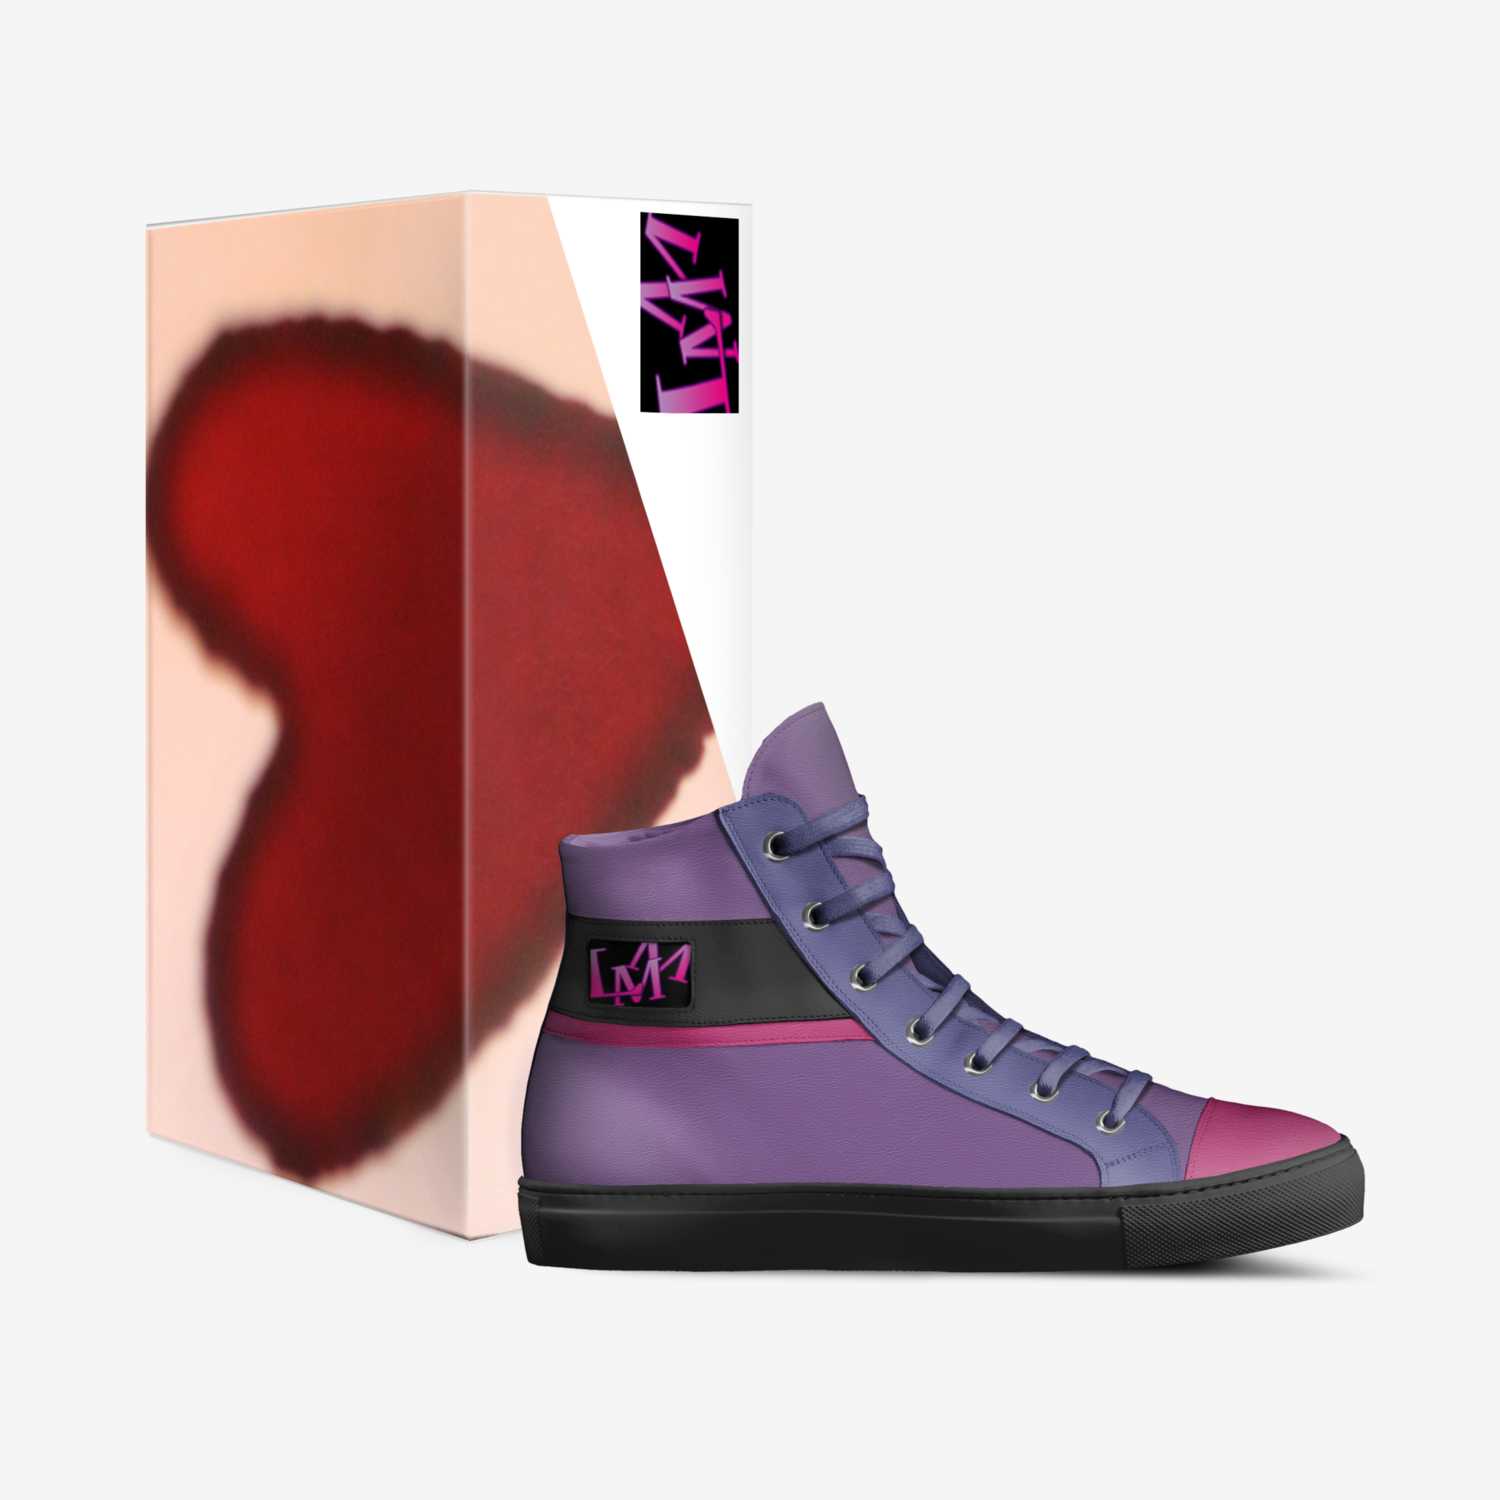 WeMoveLMM custom made in Italy shoes by Charita Lightner | Box view